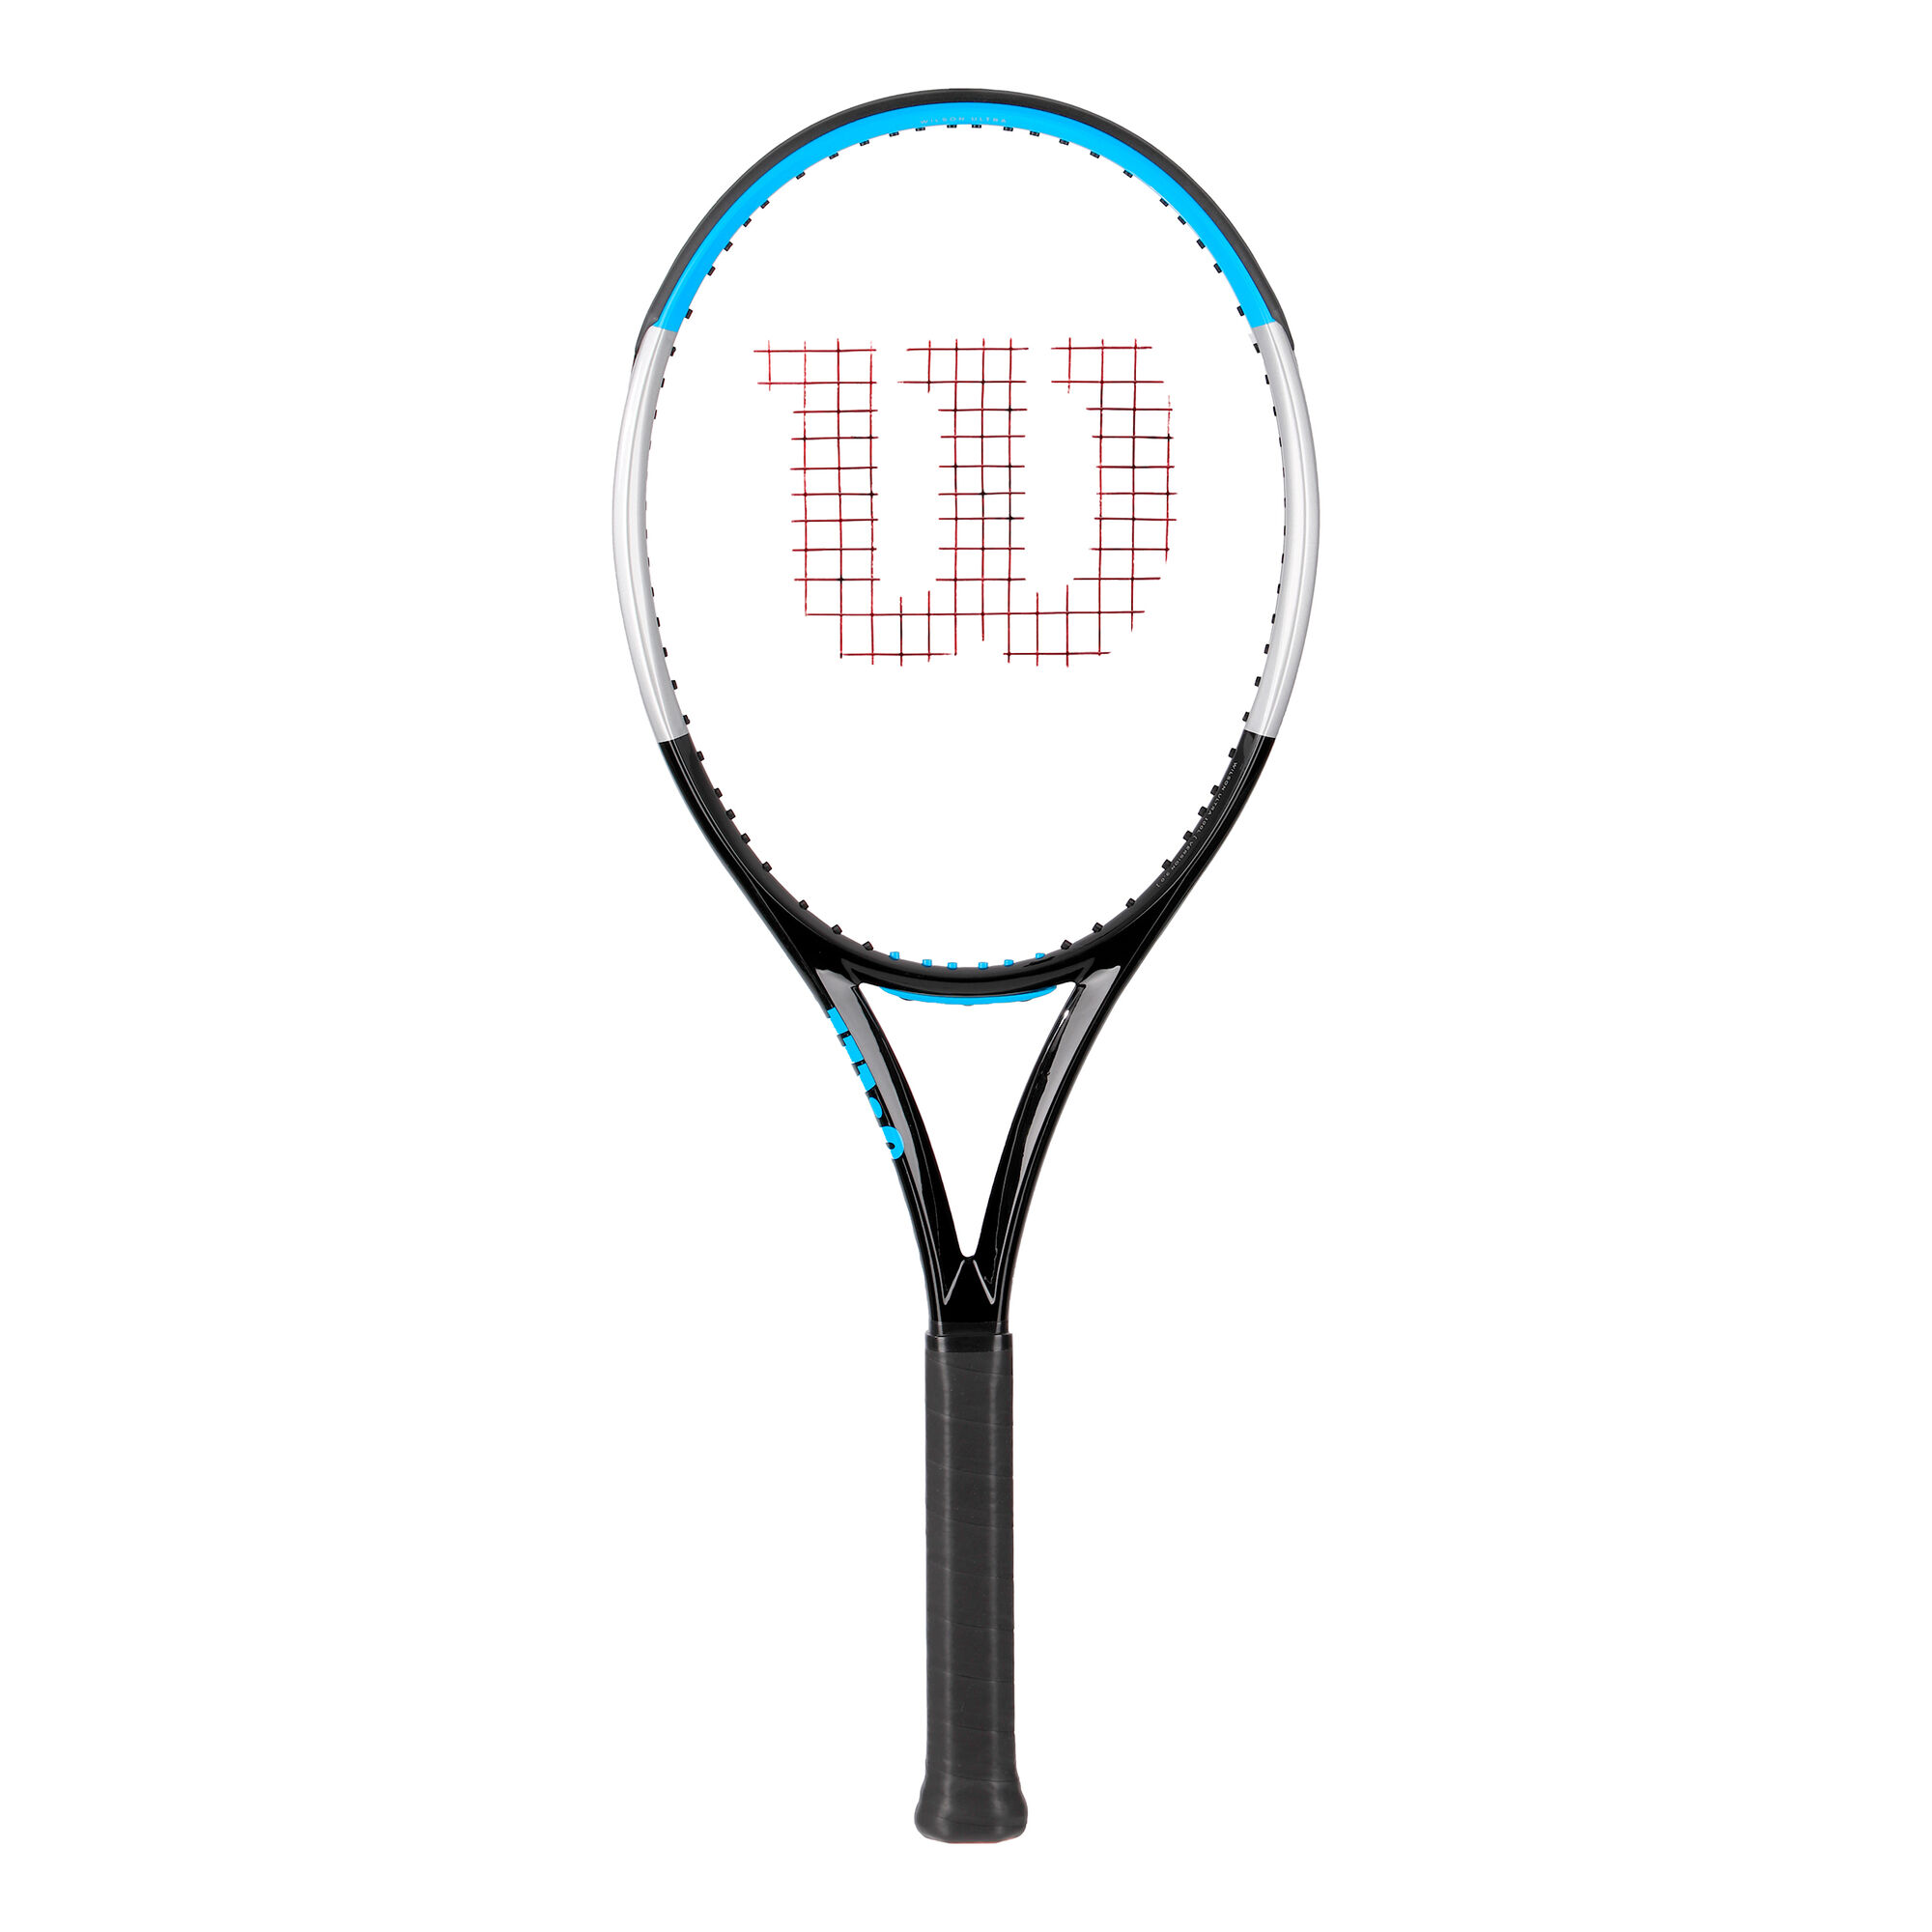 Boek Ideaal Rauw buy Wilson Ultra 100 L V3.0 Tour Racket online | Tennis-Point